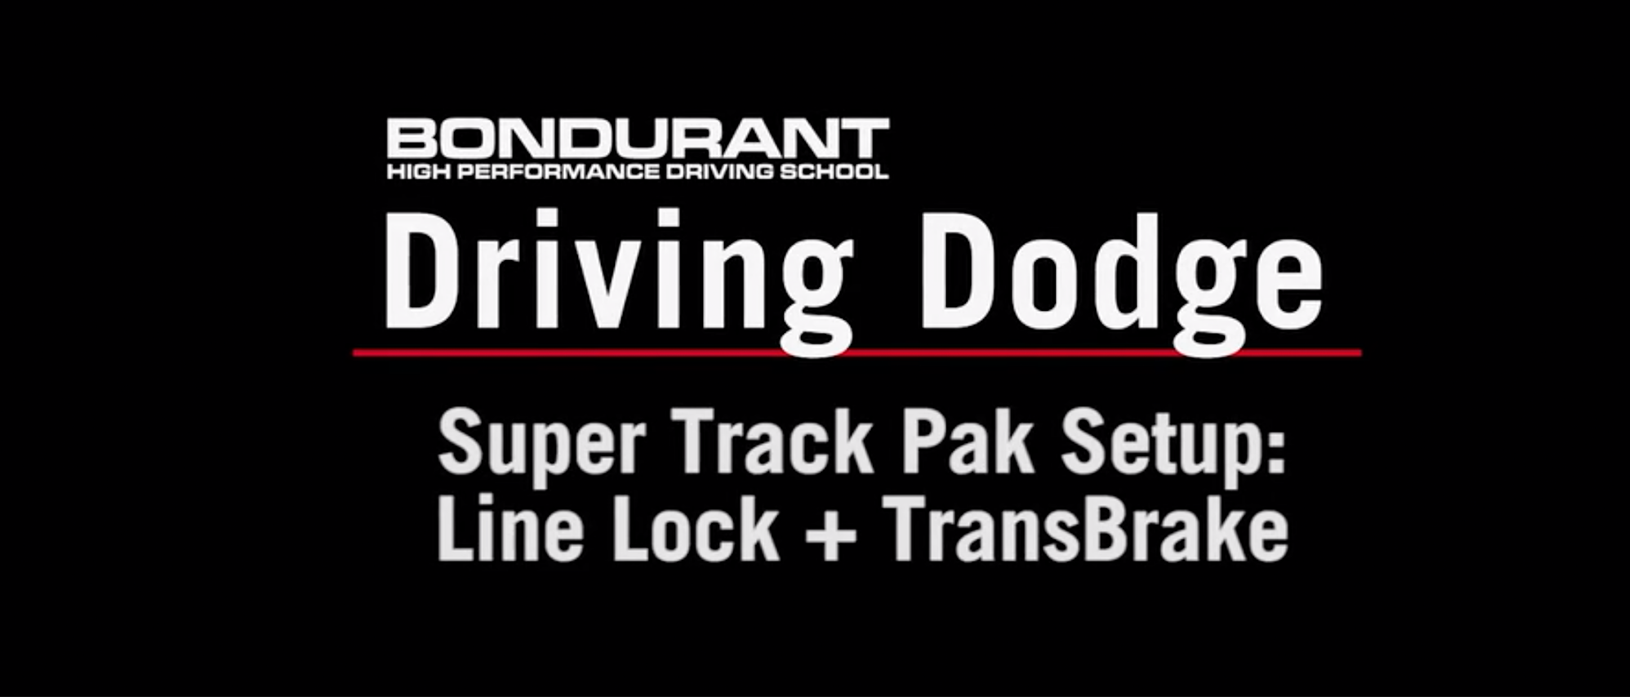 Driving Dodge with Bondurant: Super Track Pak Setup